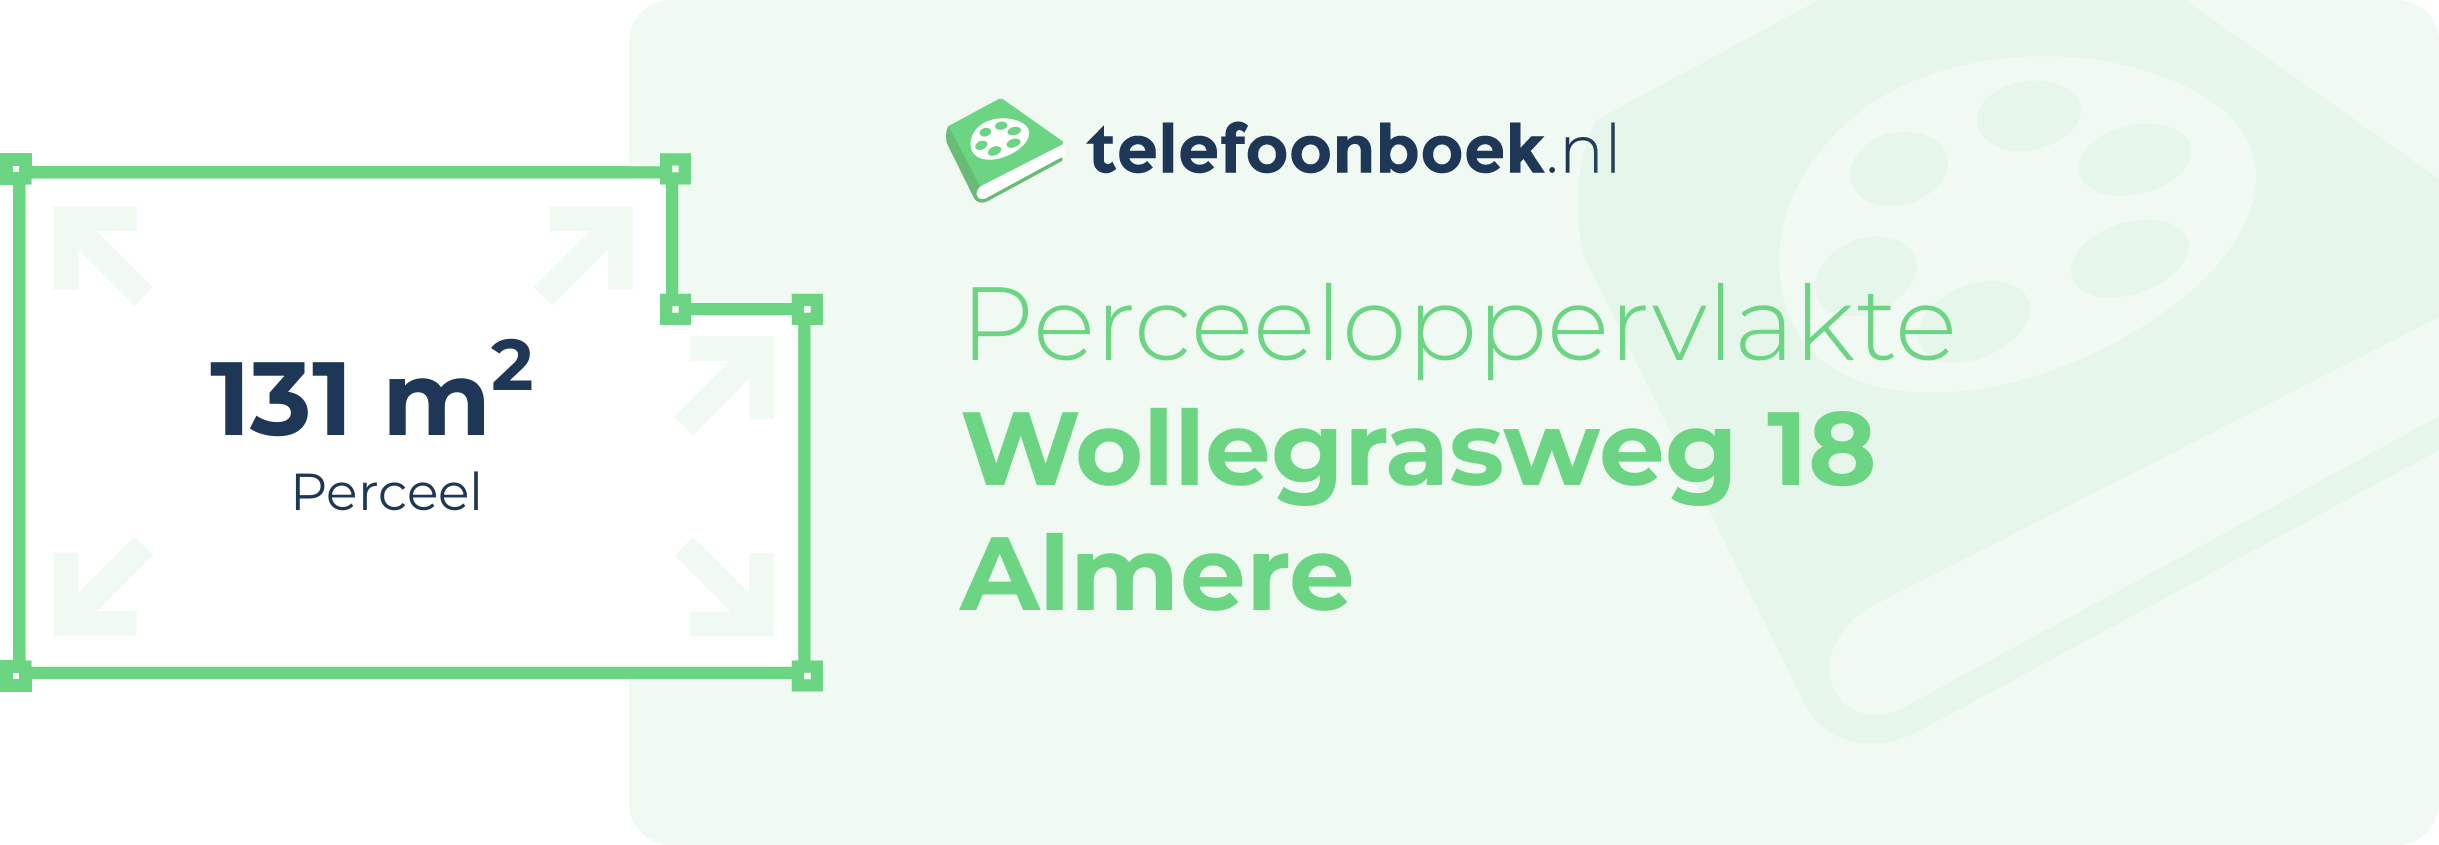 Perceeloppervlakte Wollegrasweg 18 Almere